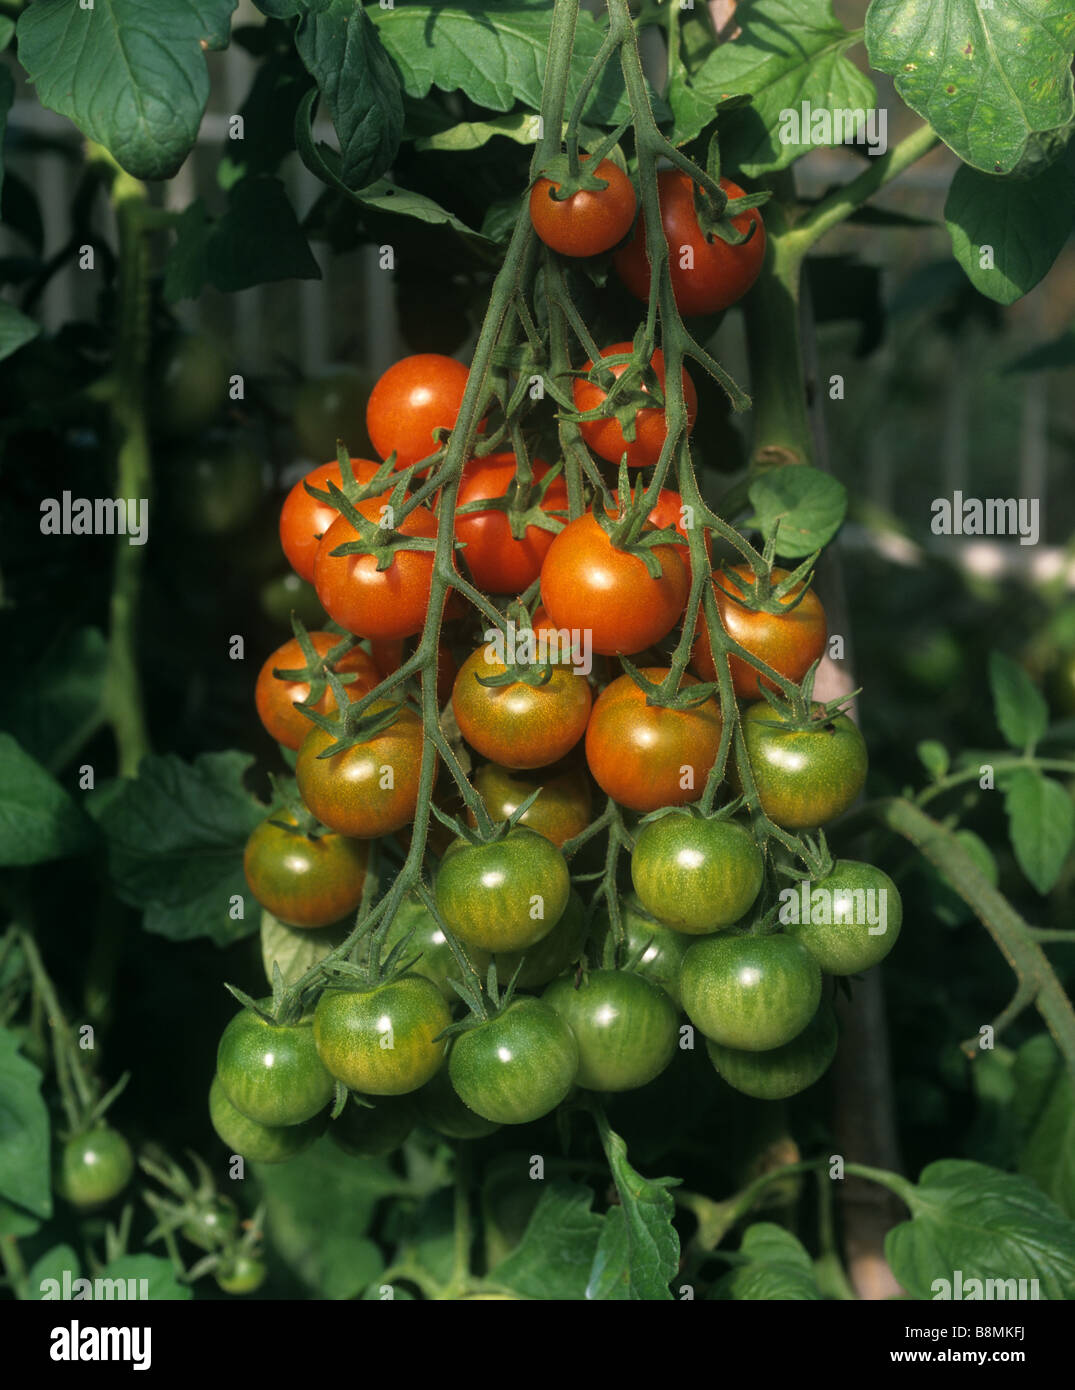 Cherry tomatoes variety Gardener s Delight ripening in garden greenhouse Stock Photo